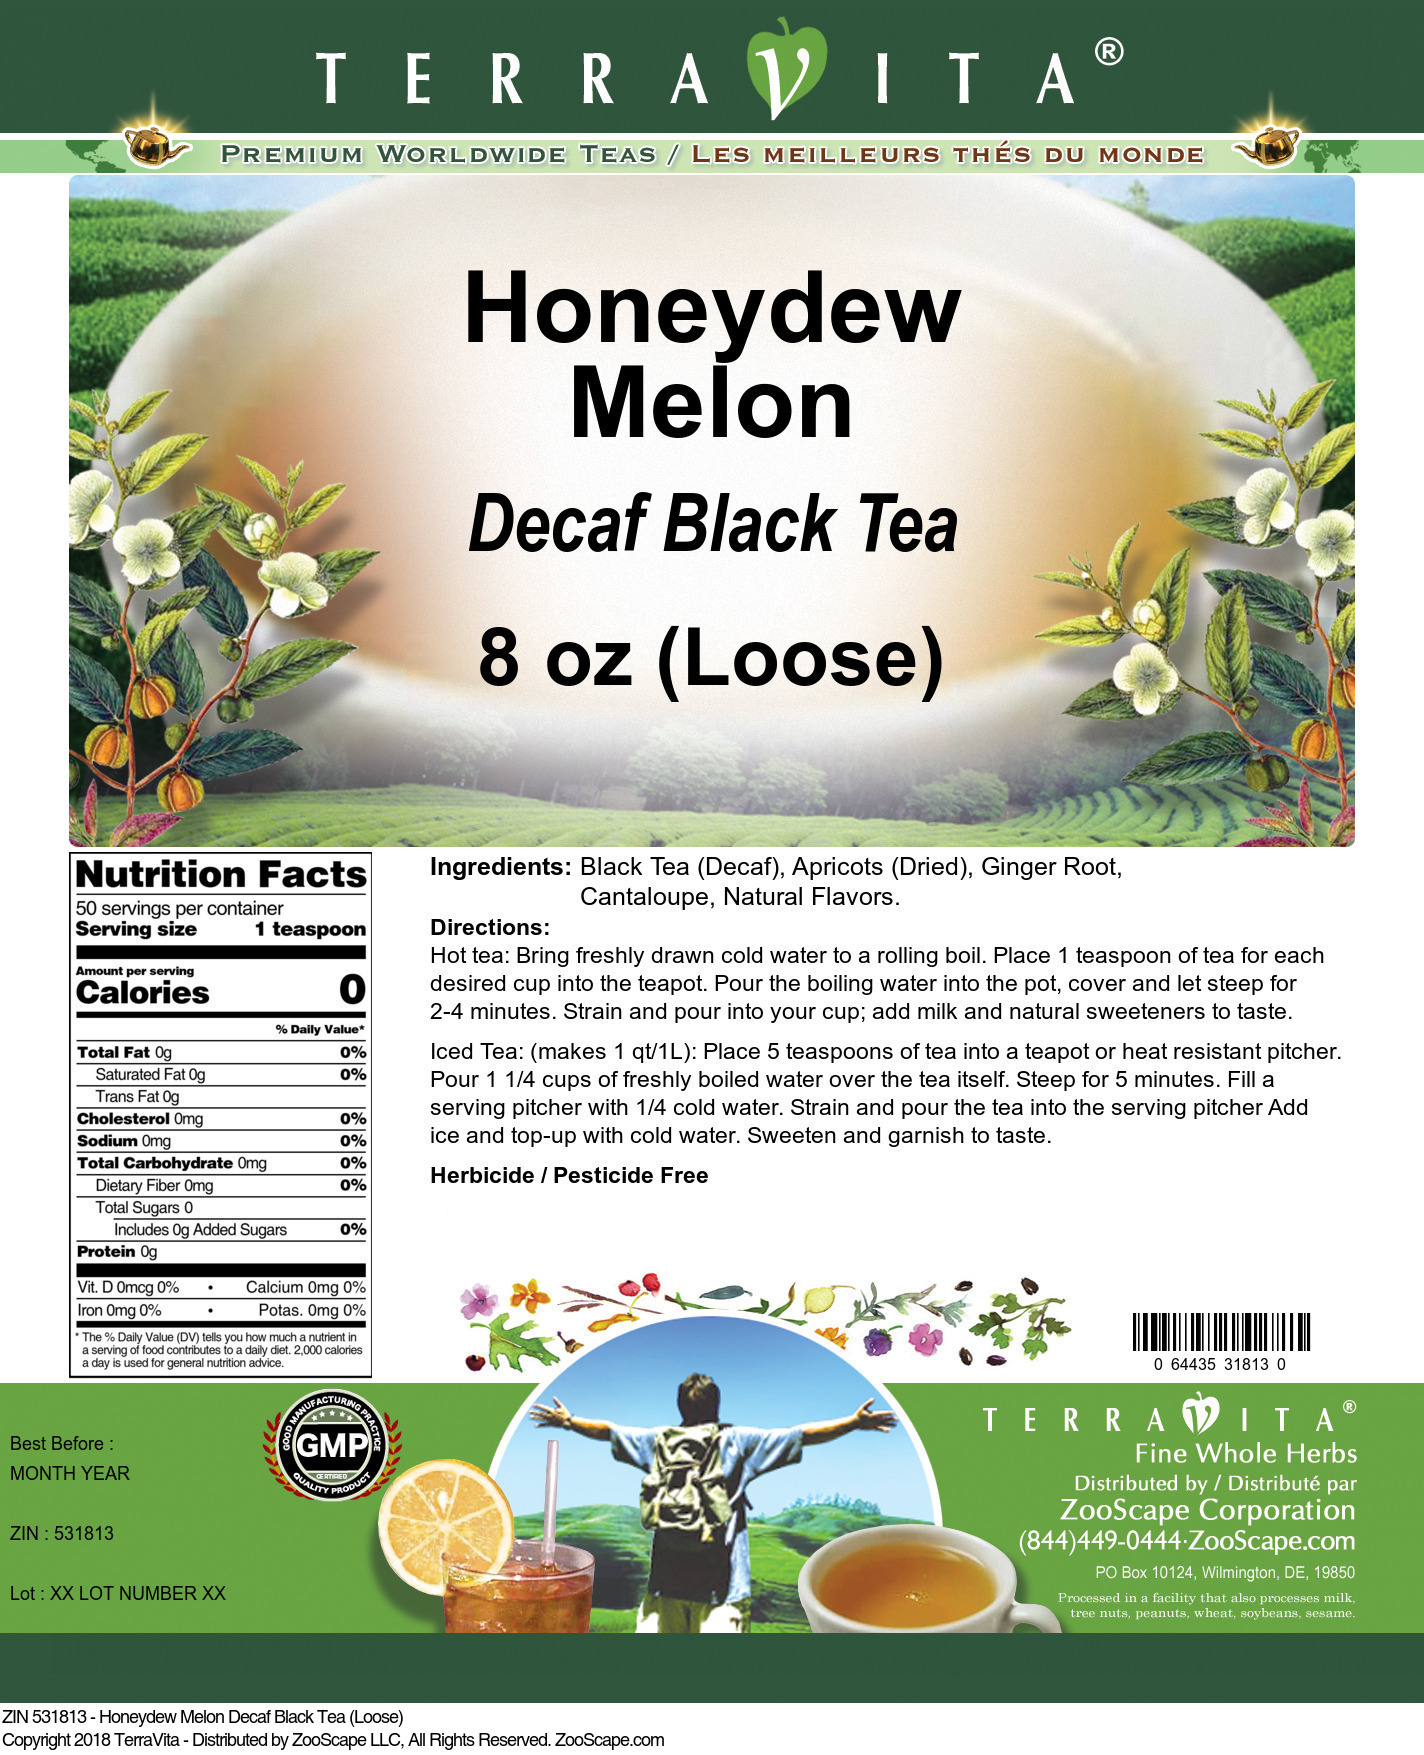 Honeydew Melon Decaf Black Tea (Loose) - Label